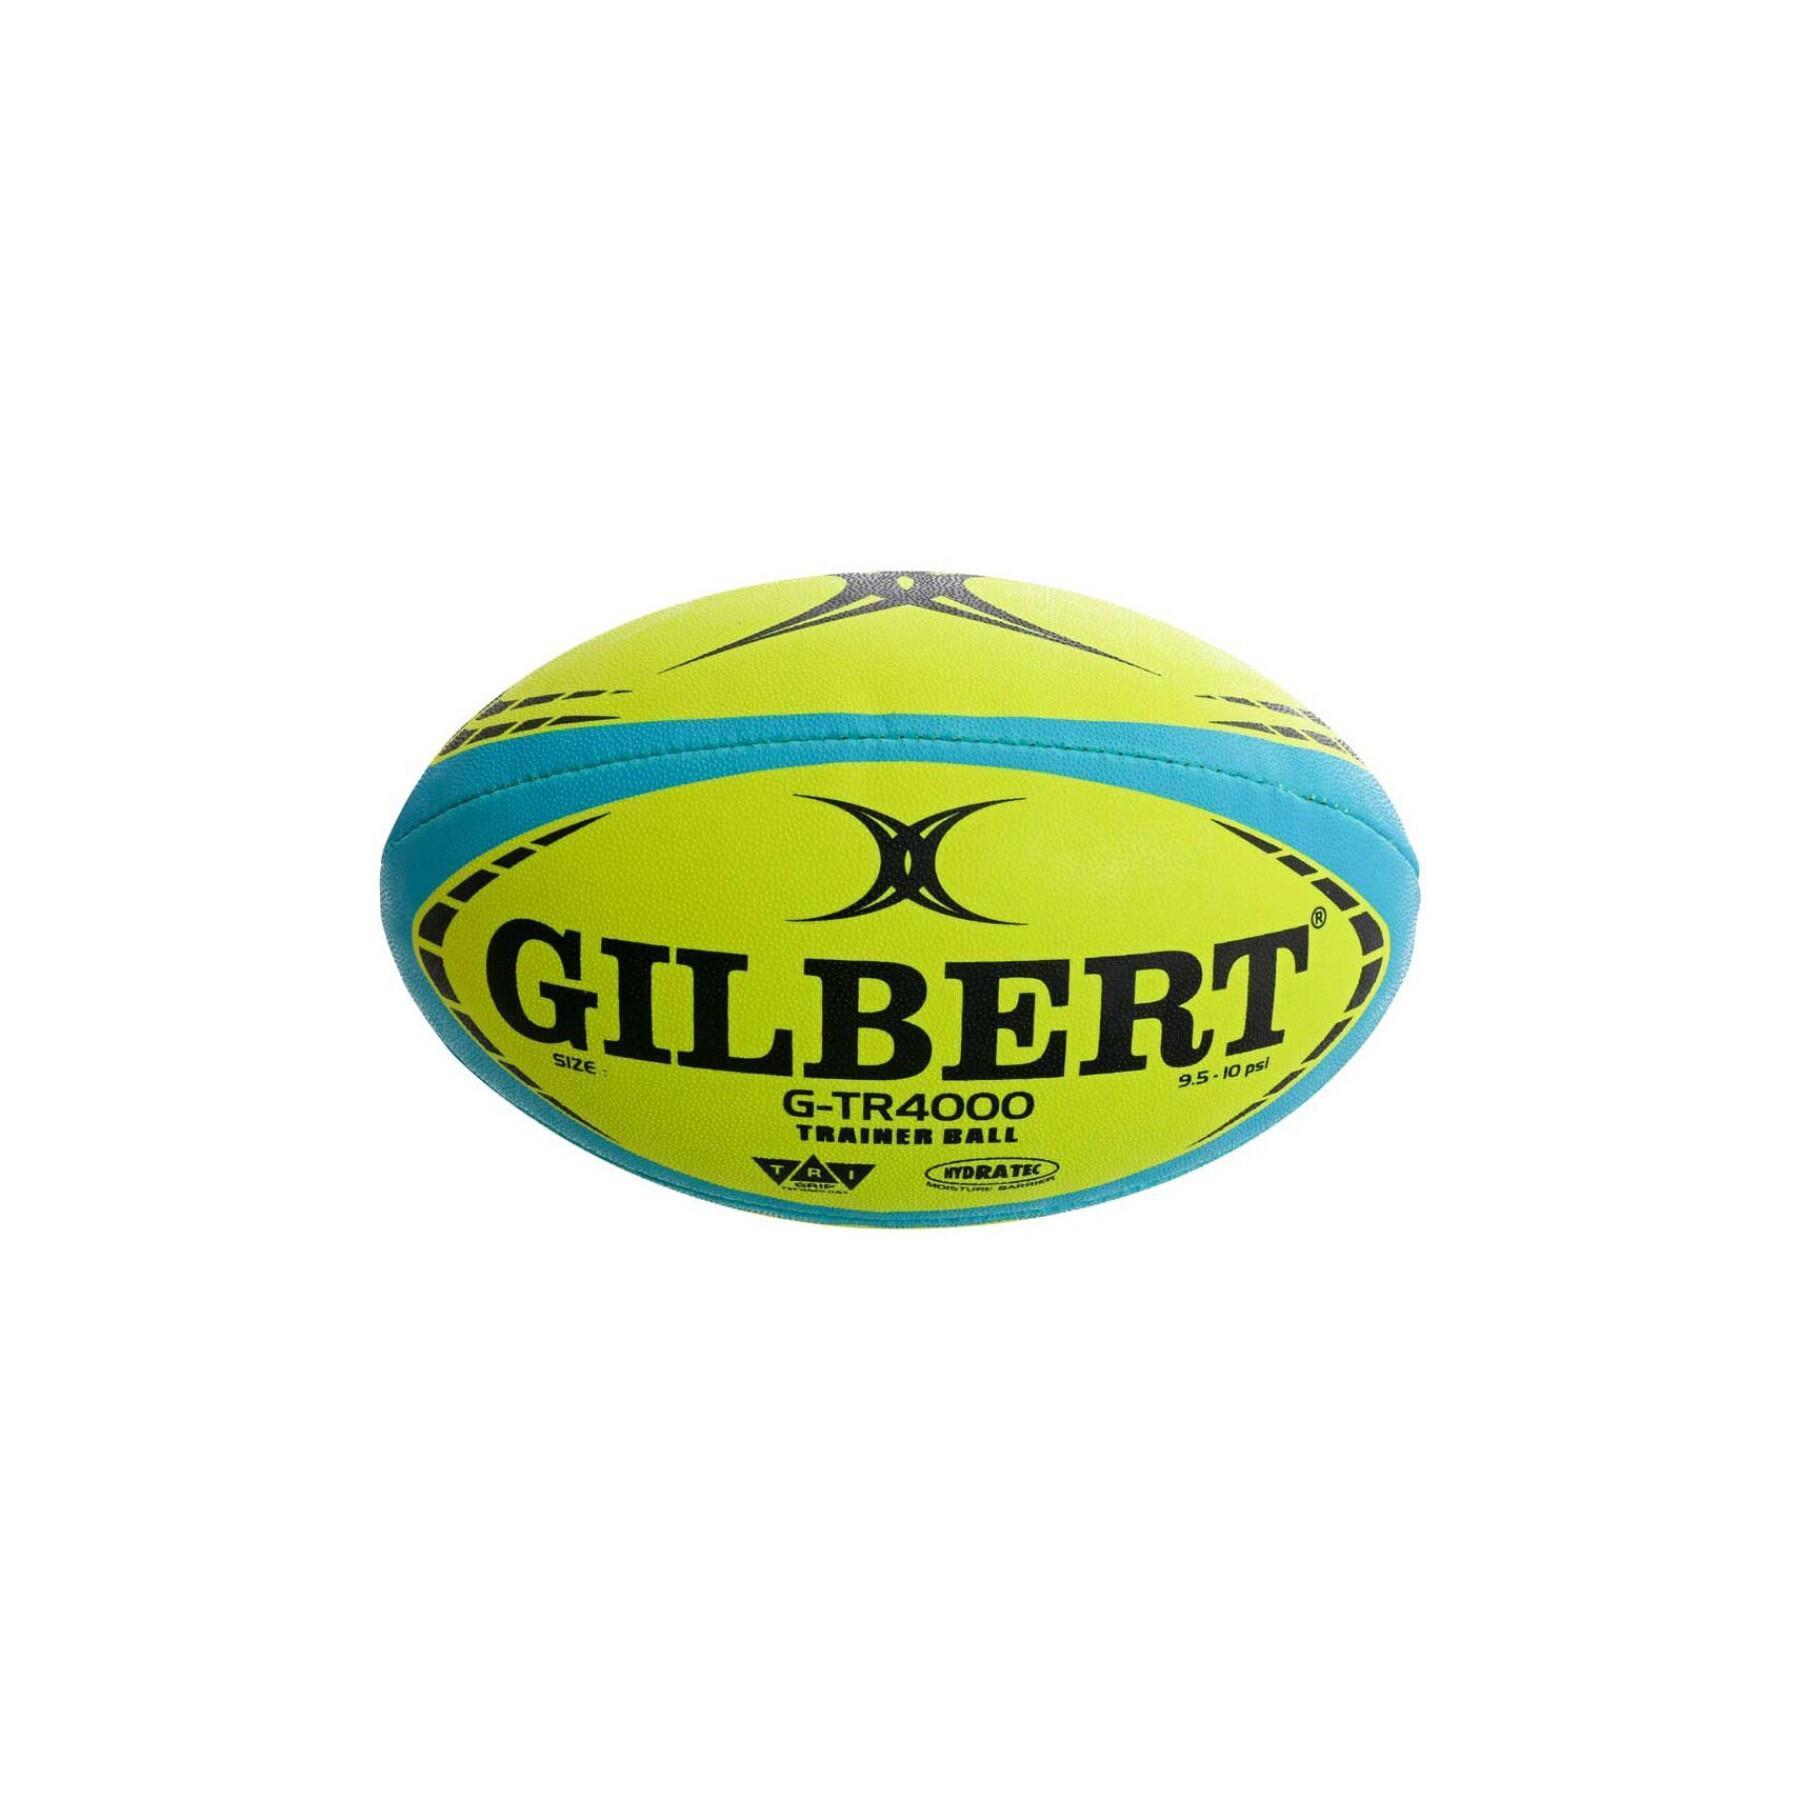 Rugbybal Gilbert G-TR4000 Trainer Fluo (maat 4)